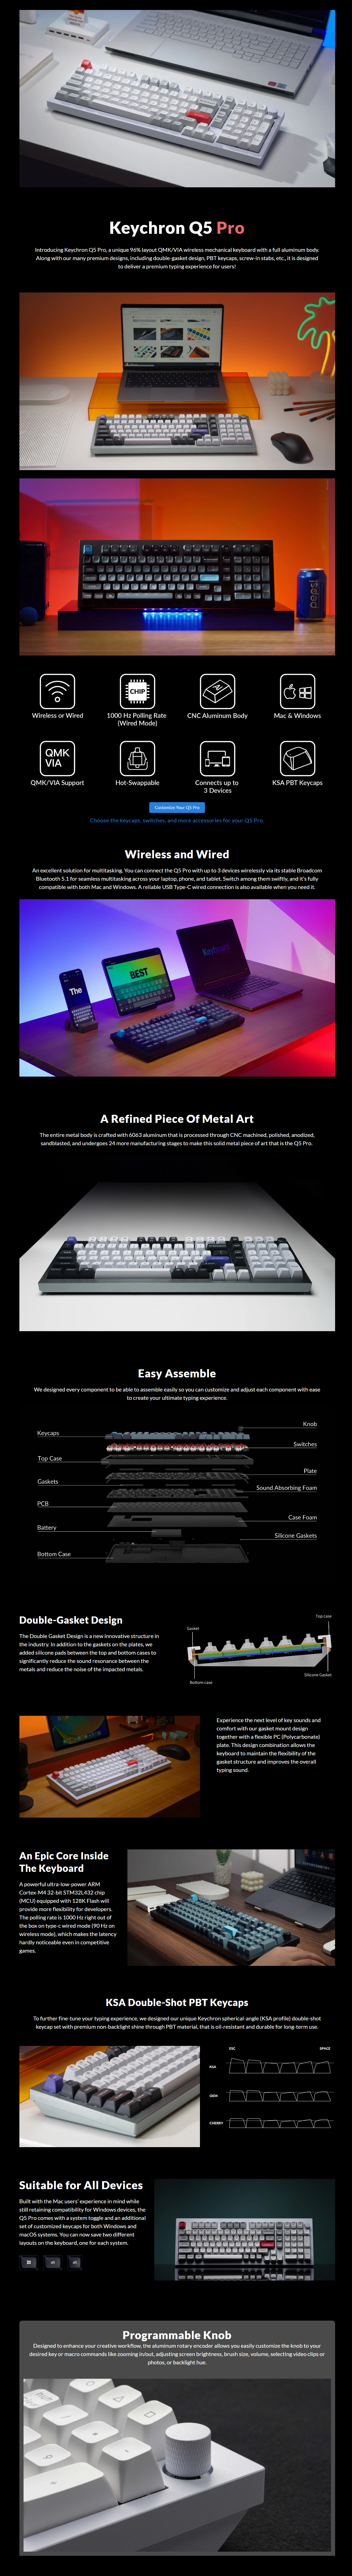 Keychron Q5 Pro - QMK Custom Wireless Mechanical Keyboard by